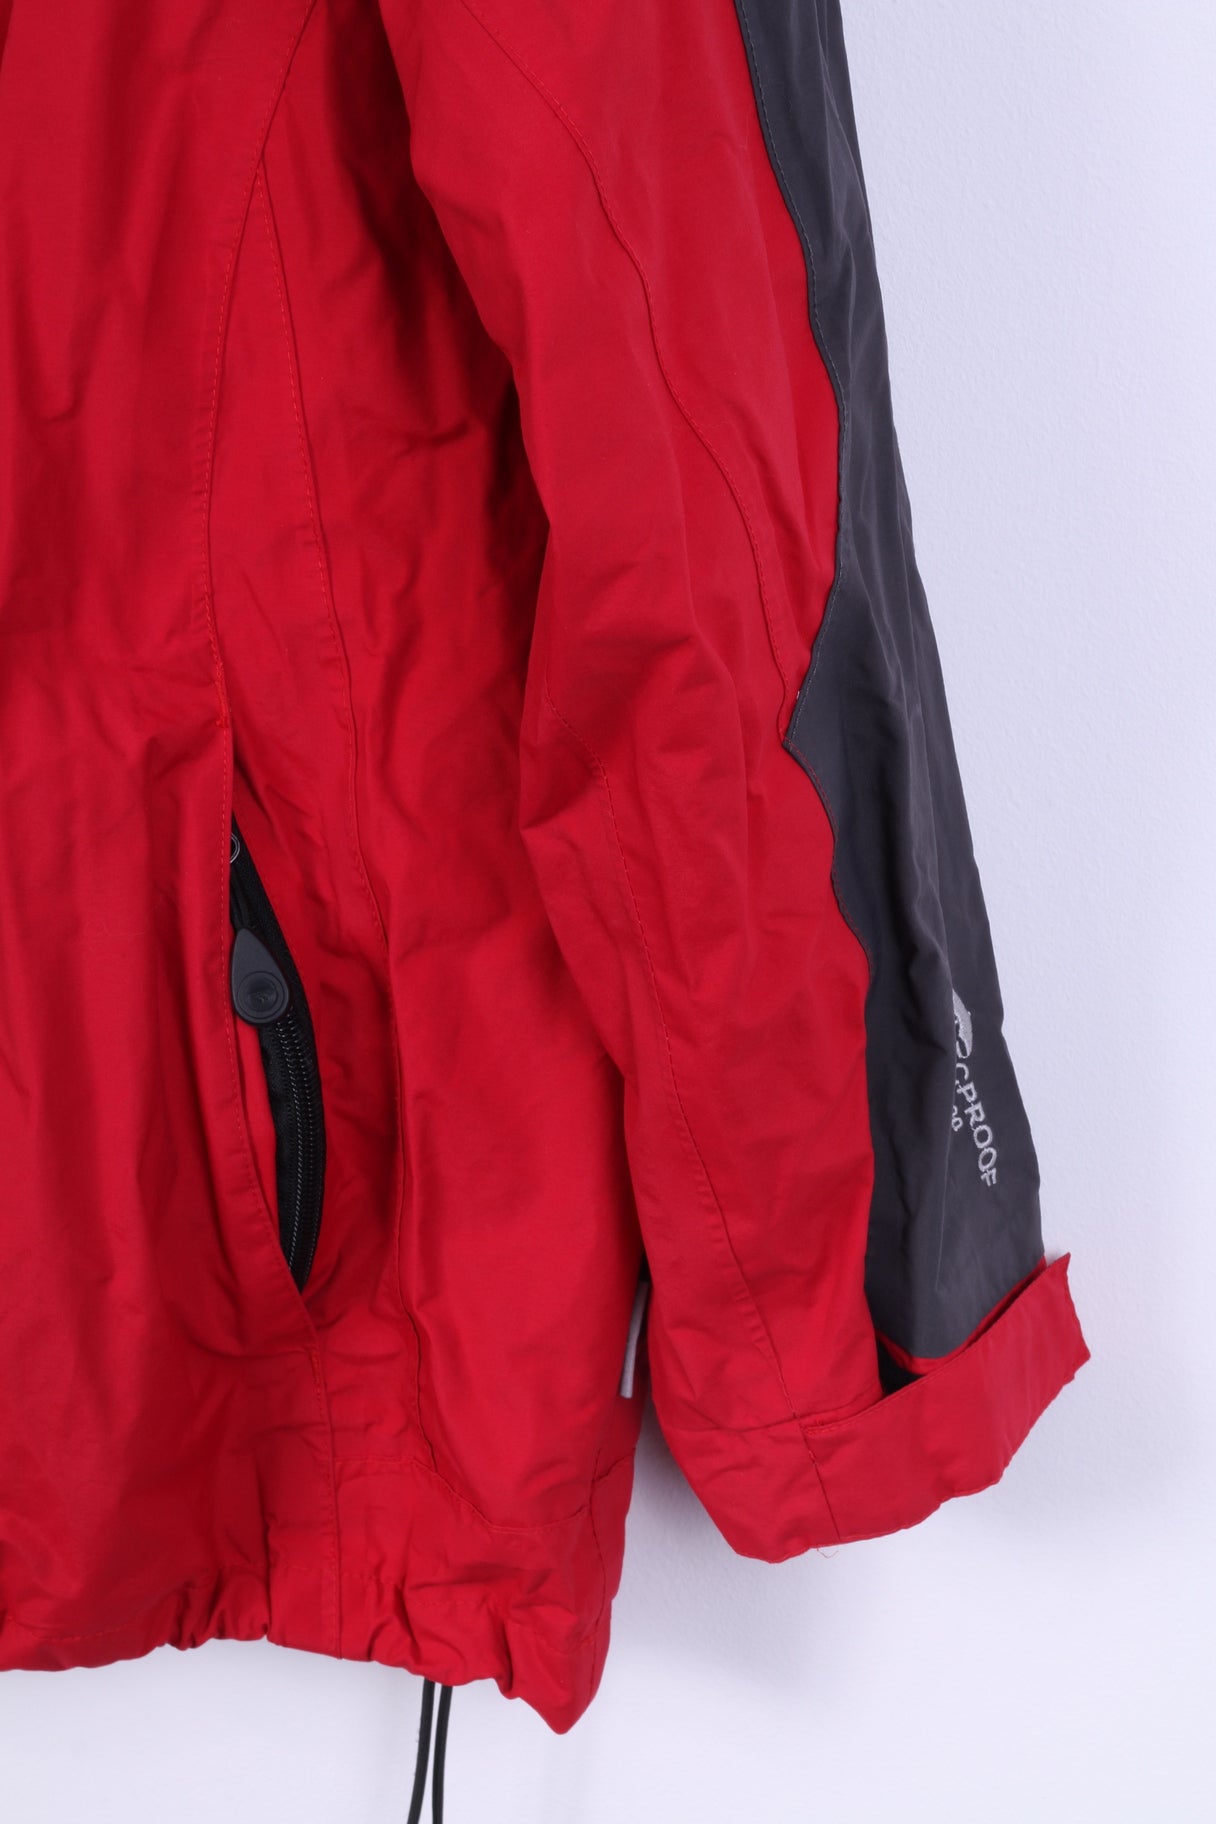 Hi-Tec Mens L Jacket Red Nylon Breathable Waterproof Windproof